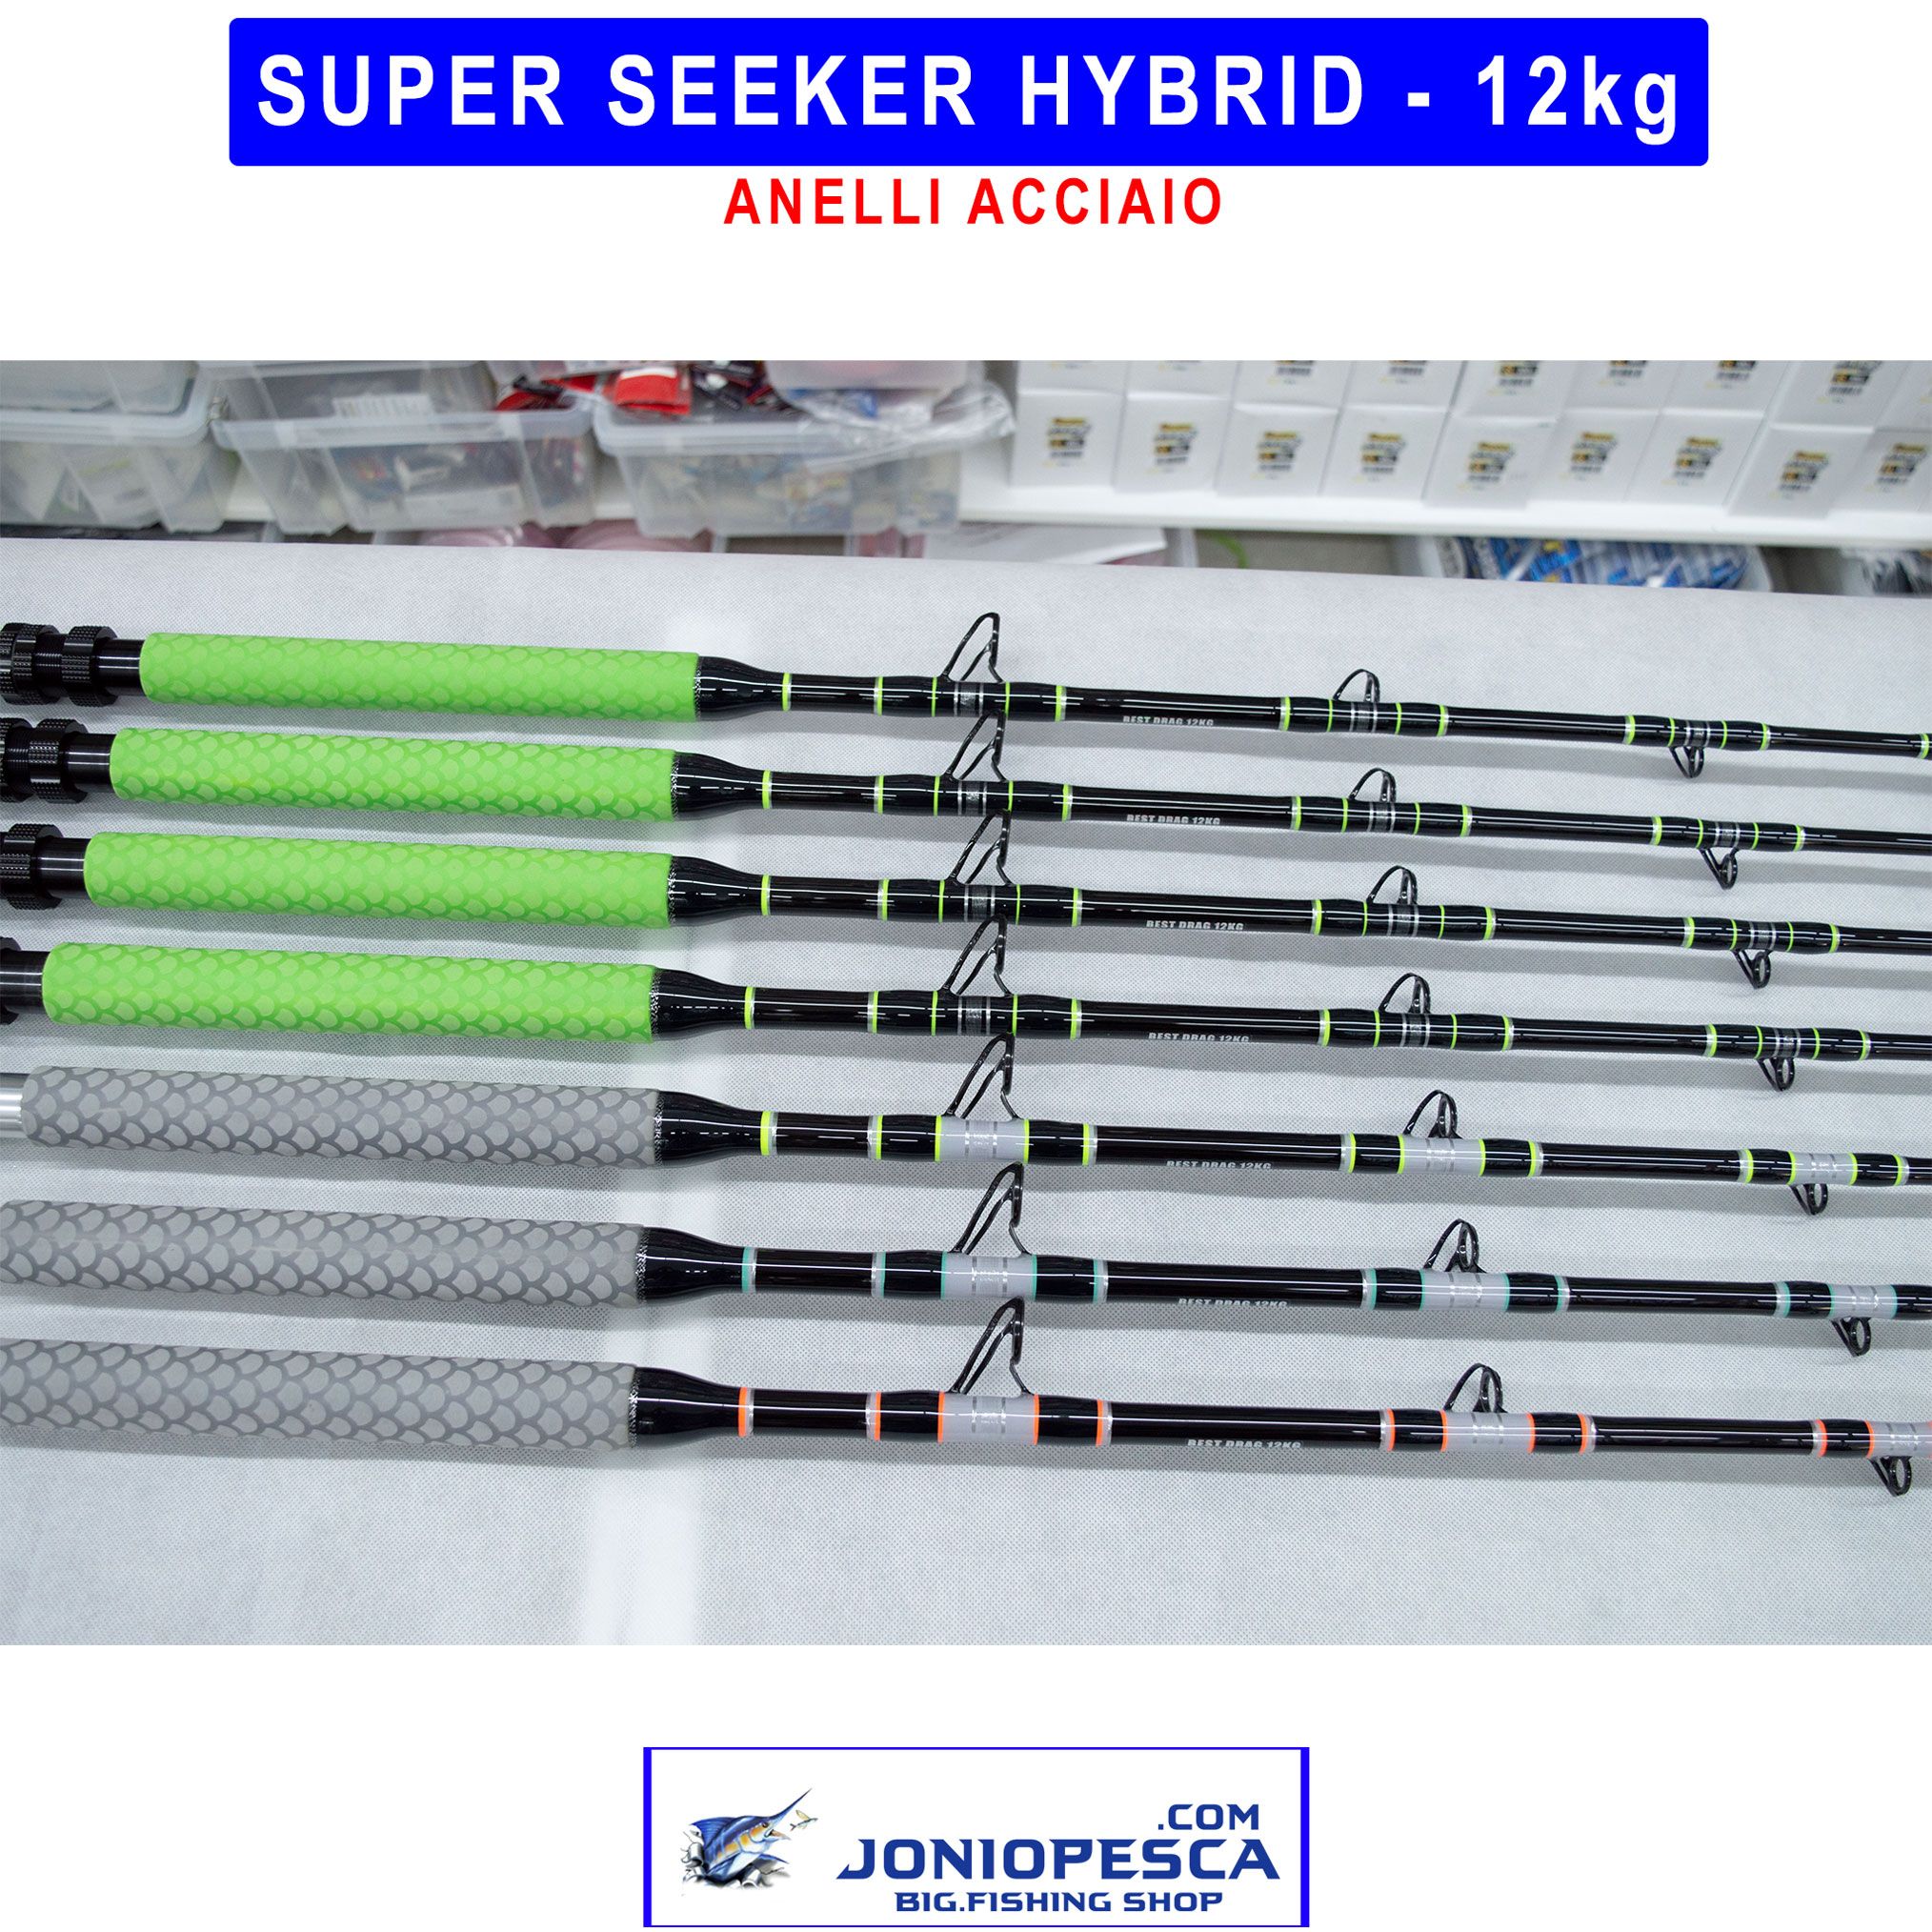 super-seeker-hybrid-12kg-anelli-acciaio-5